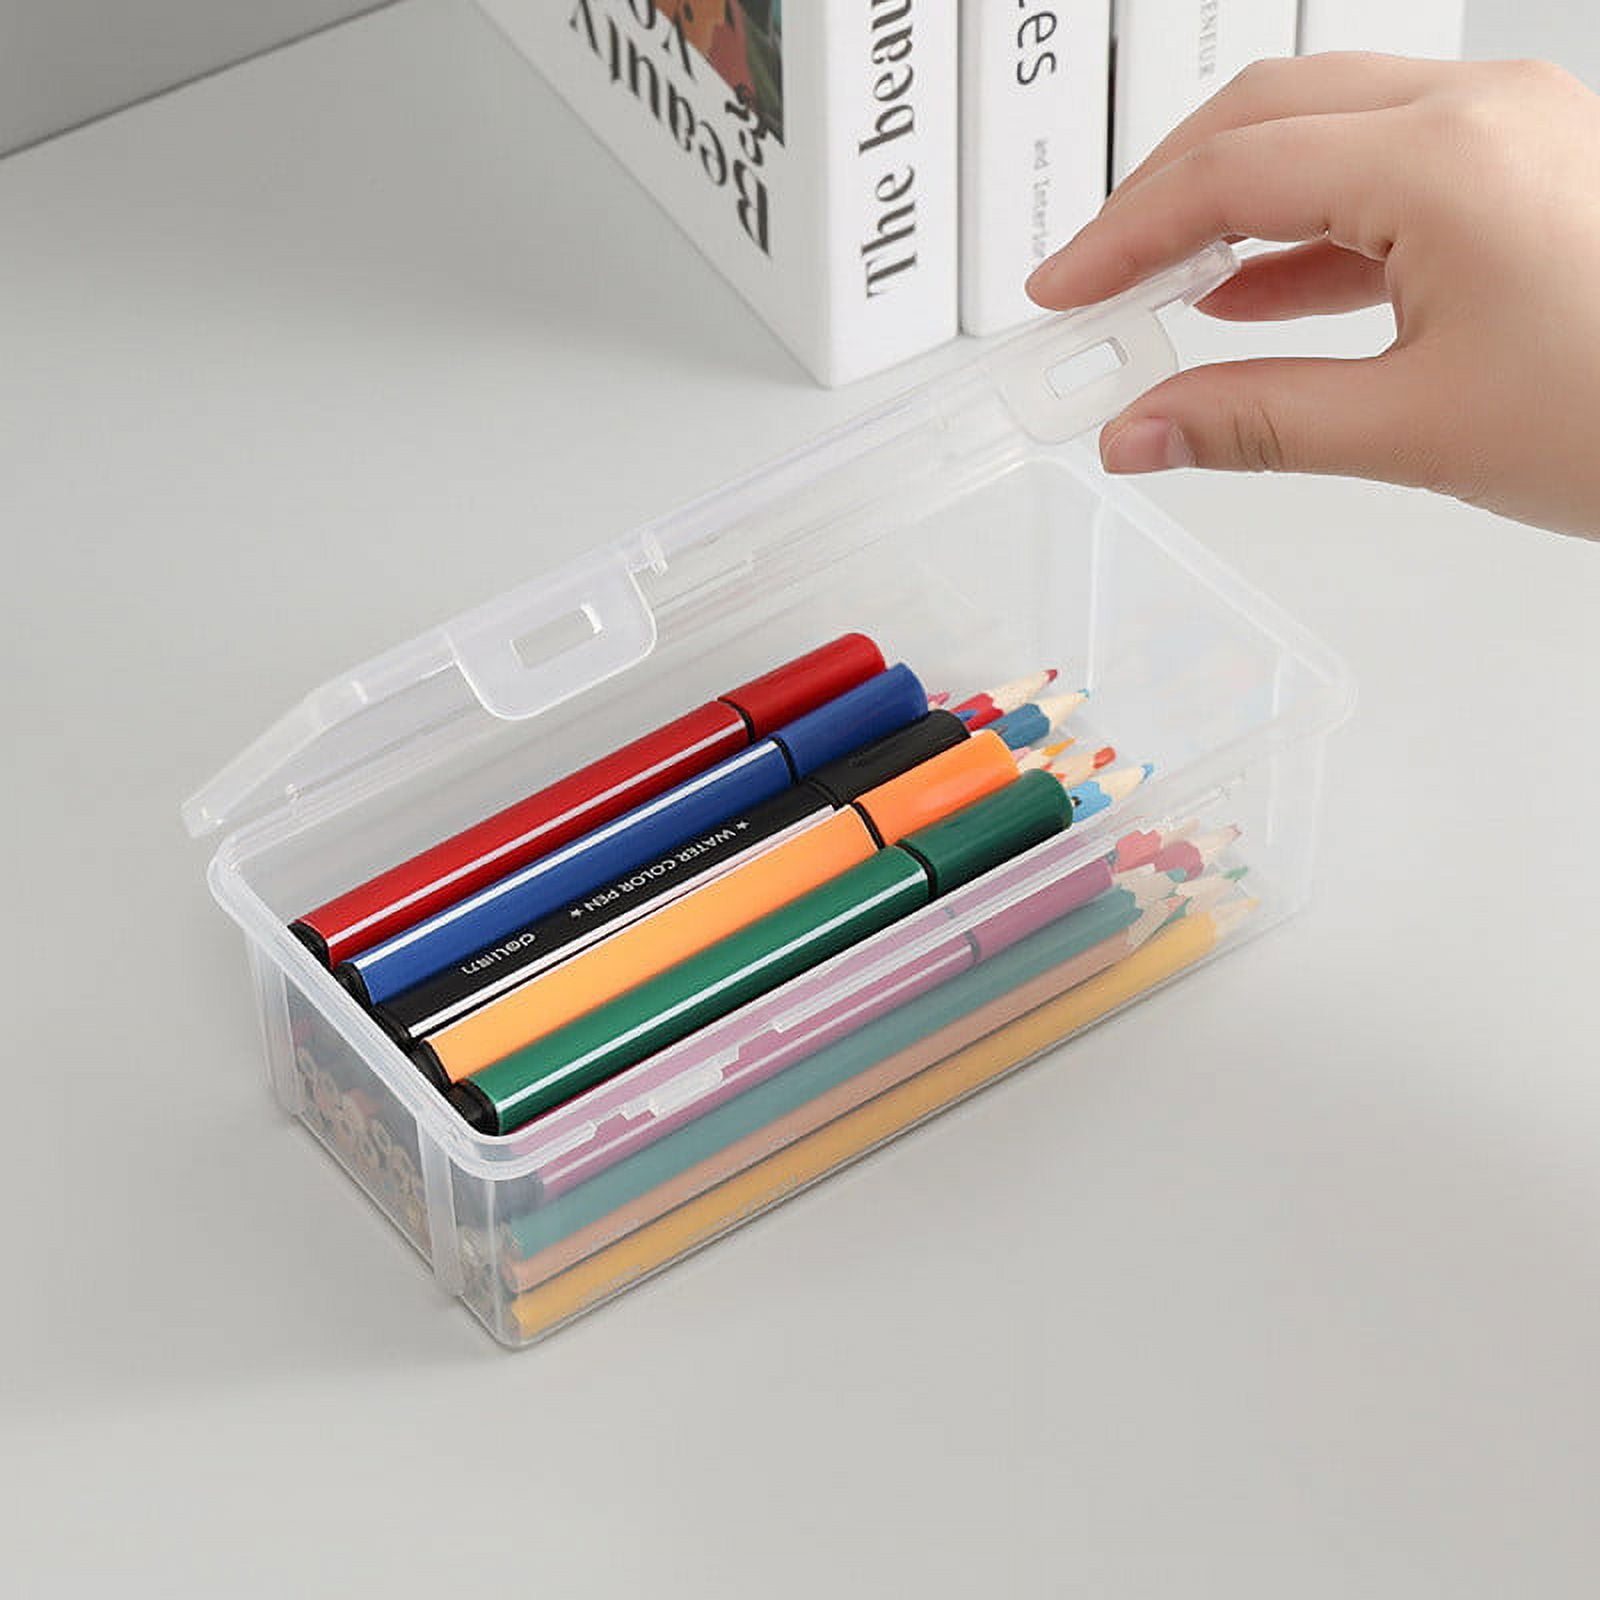 OFIXO Large Pencil Box Case Storage for Pencils, Gel Pens, Markers